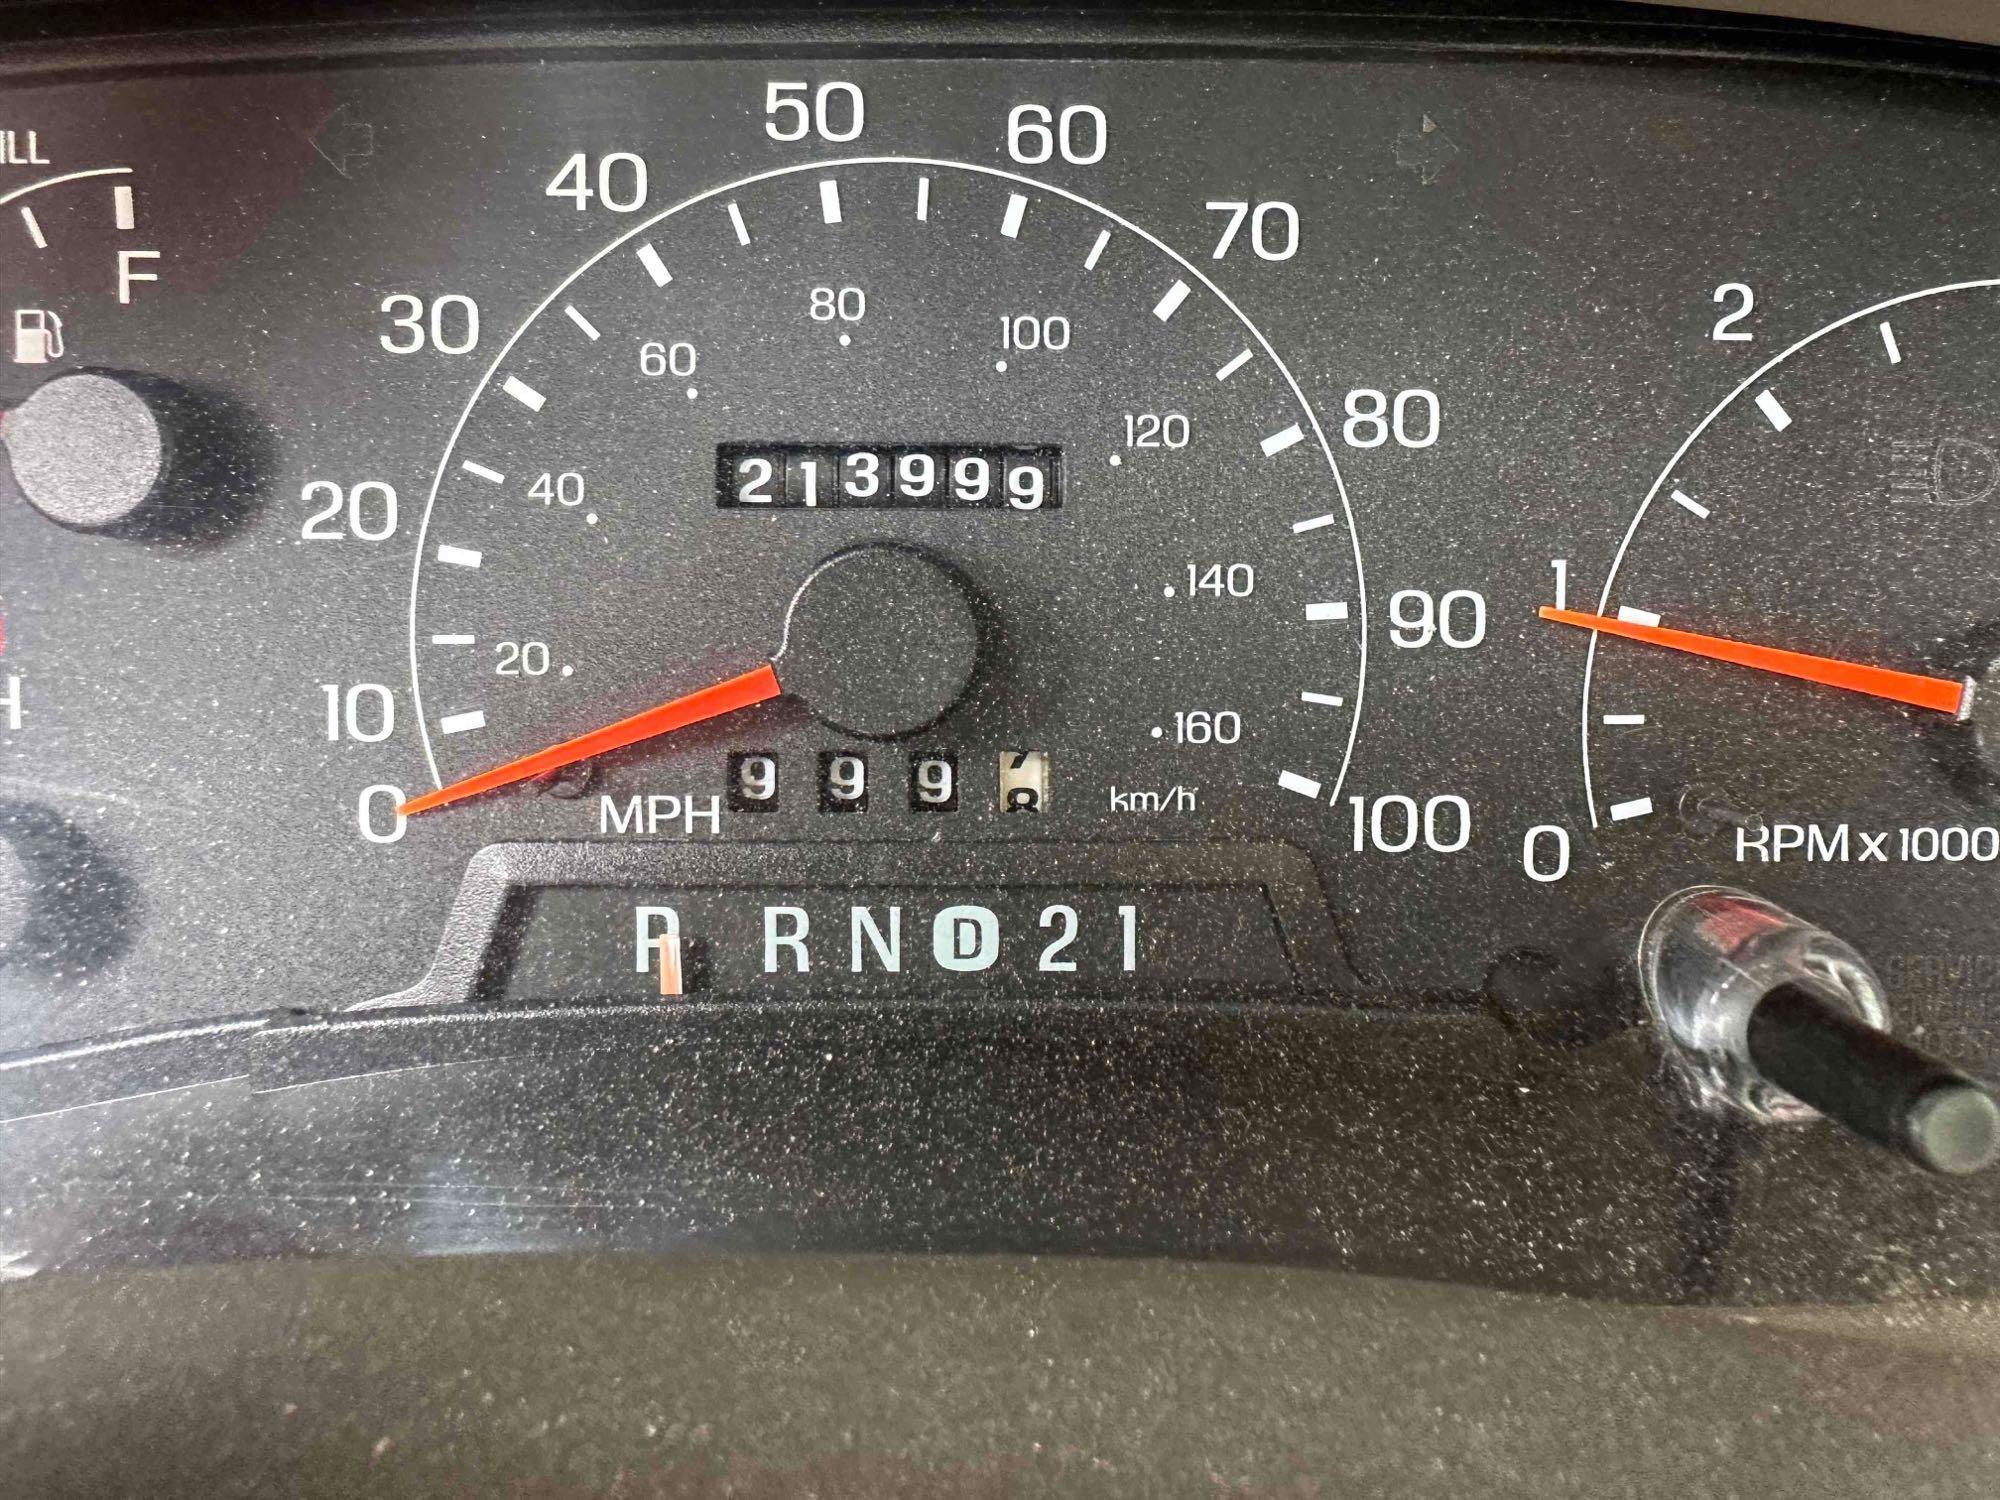 2000 Ford Excursion 4x4 (MPV), VIN # 1FMNU43S9YED63101